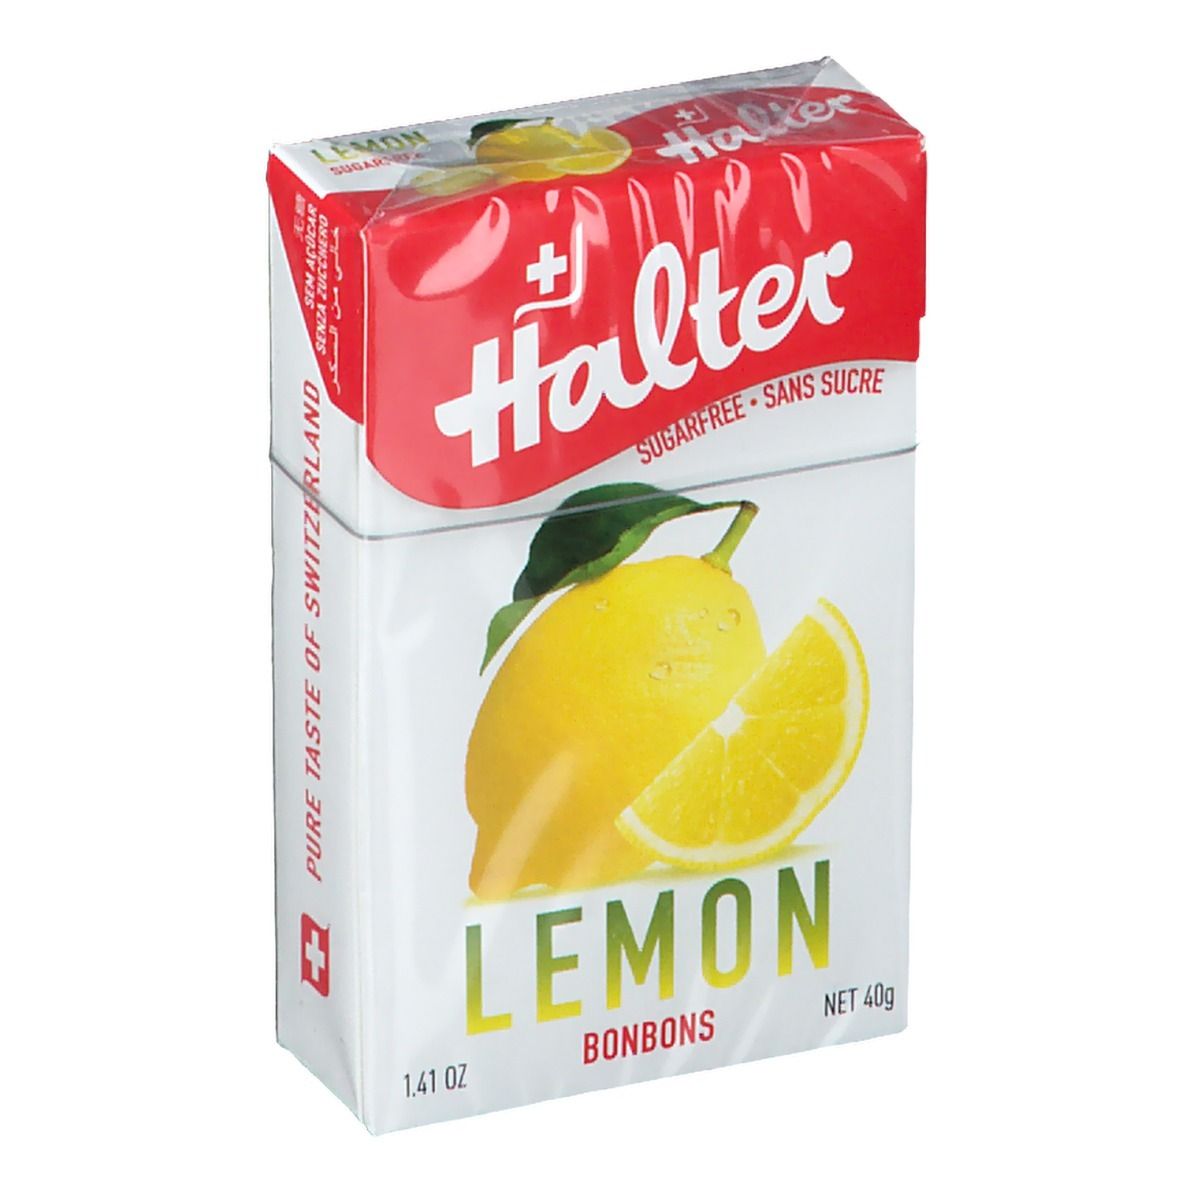 Image of Halter Lemon Bonbons Zuckerfrei